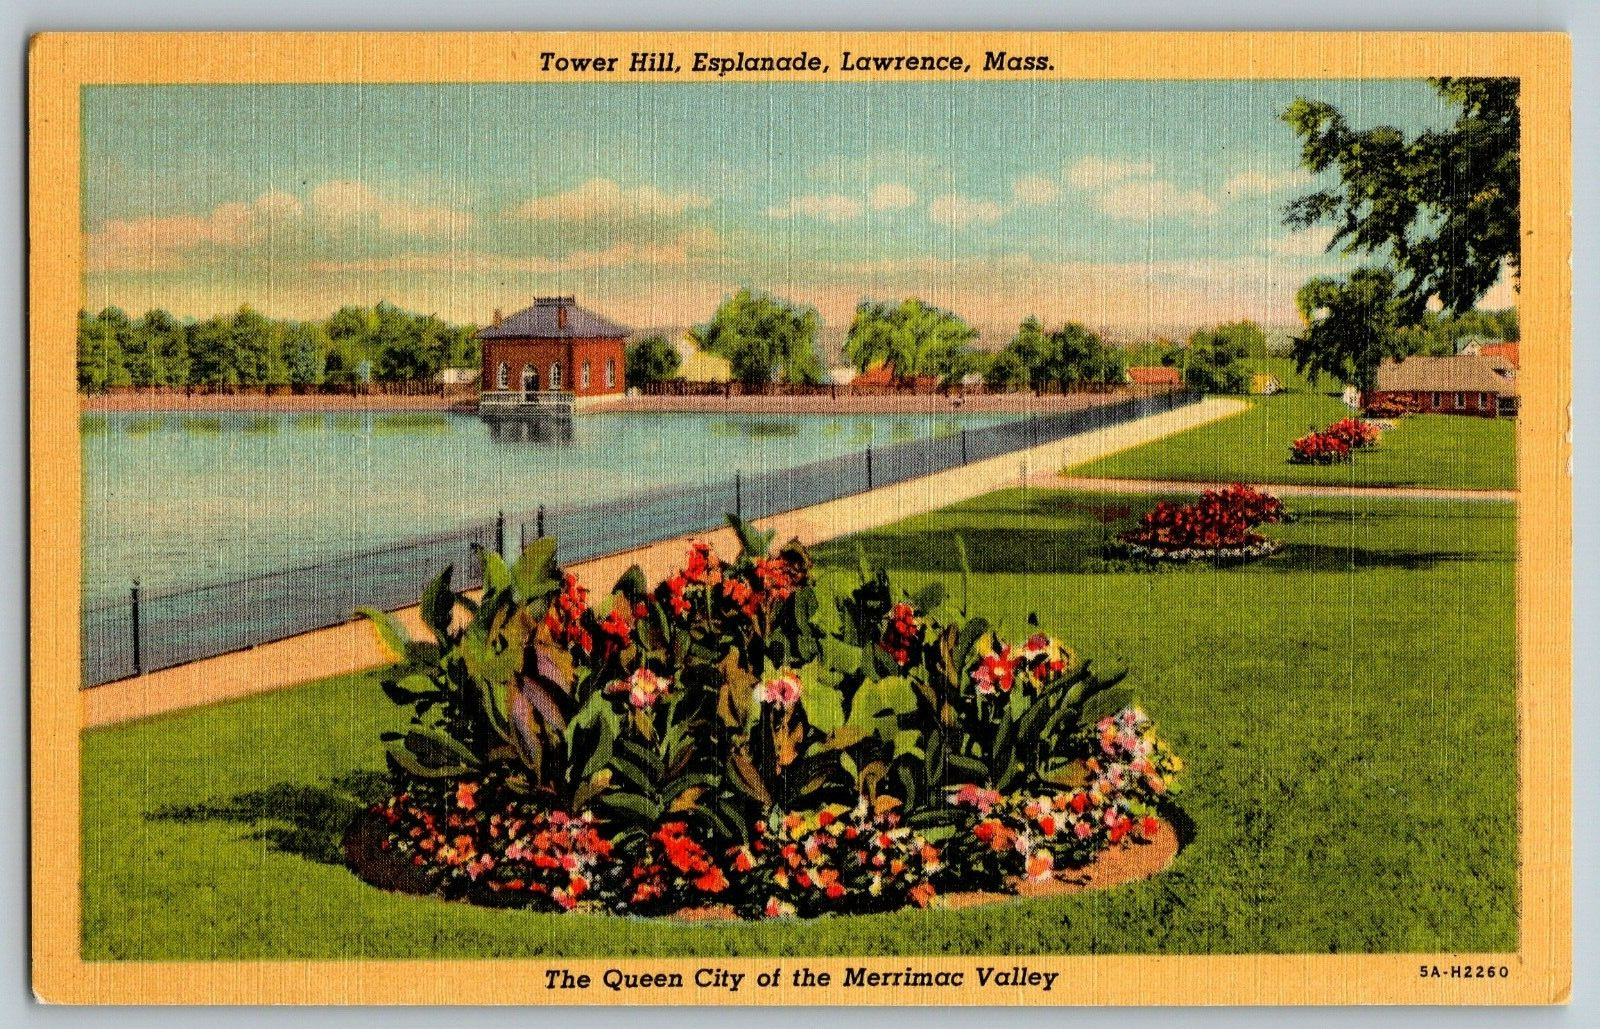 Lawrence, Massachusetts - Tower Hill, Esplanade - Vintage Postcard - Unposted